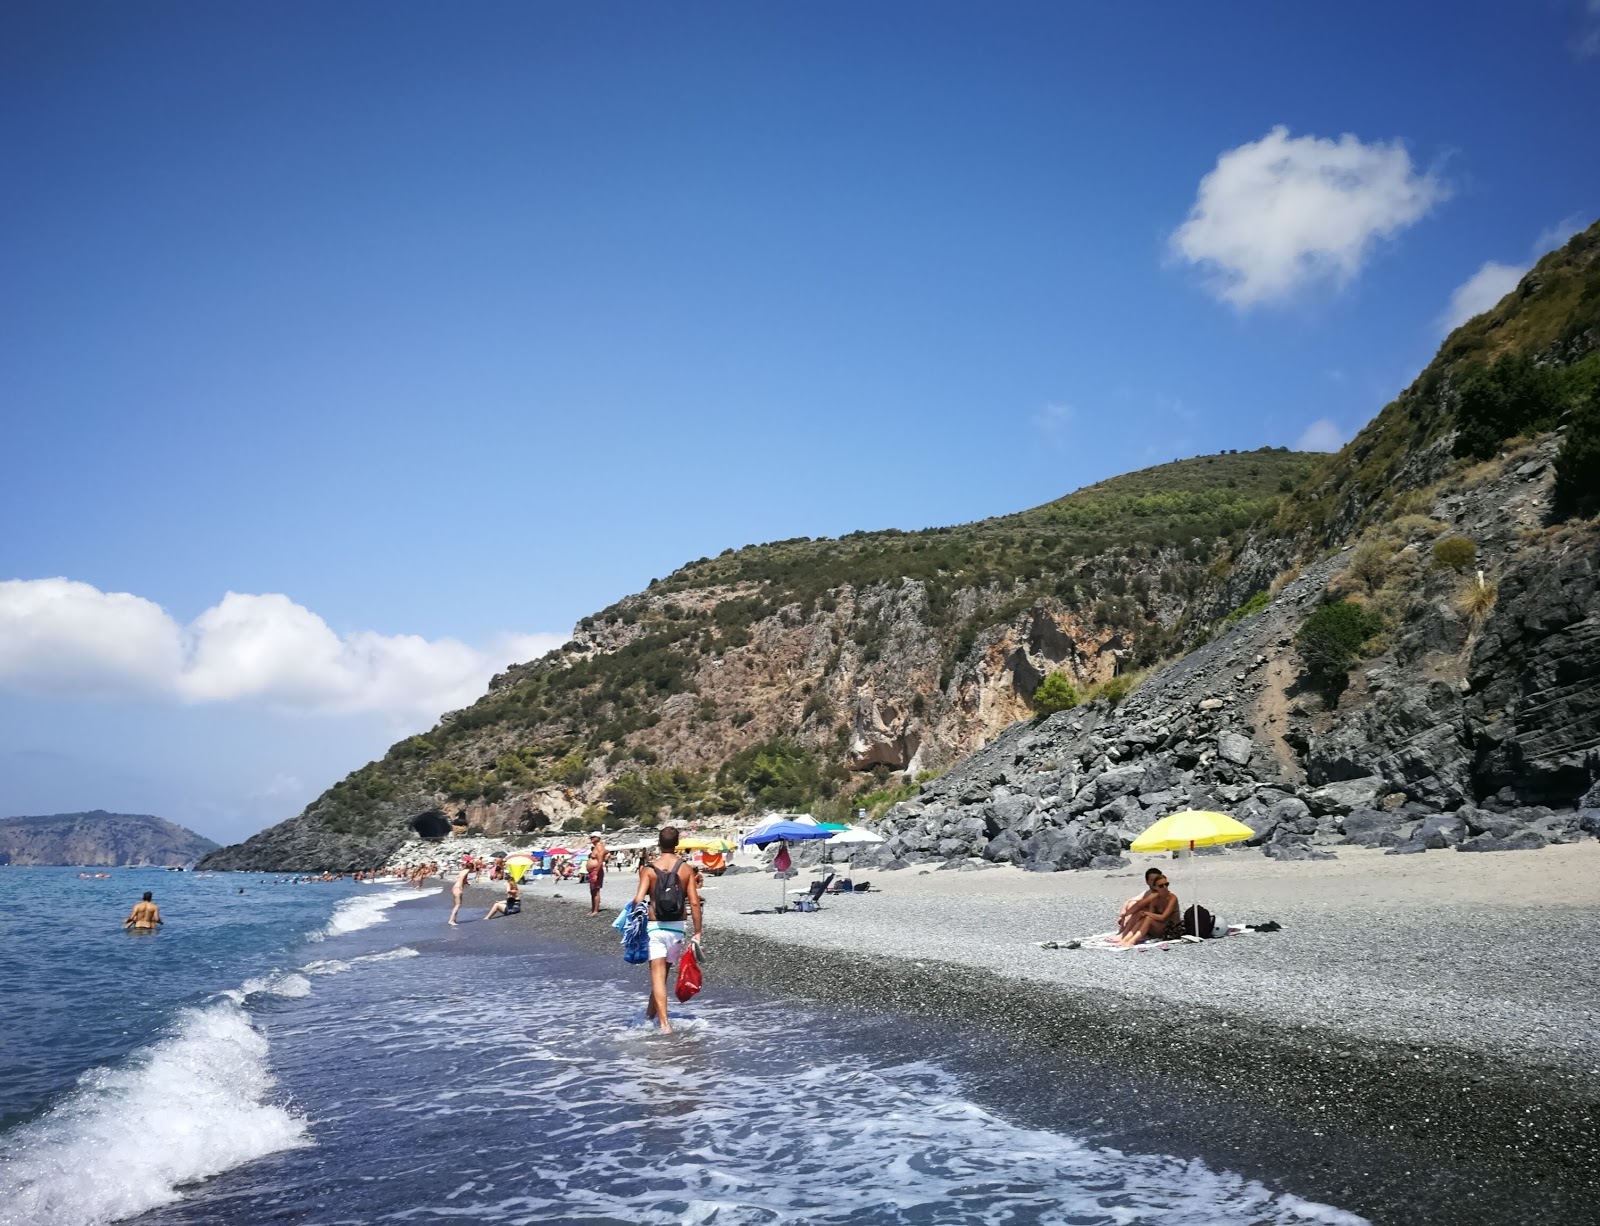 Foto av Spiaggia del Troncone med brunsand yta